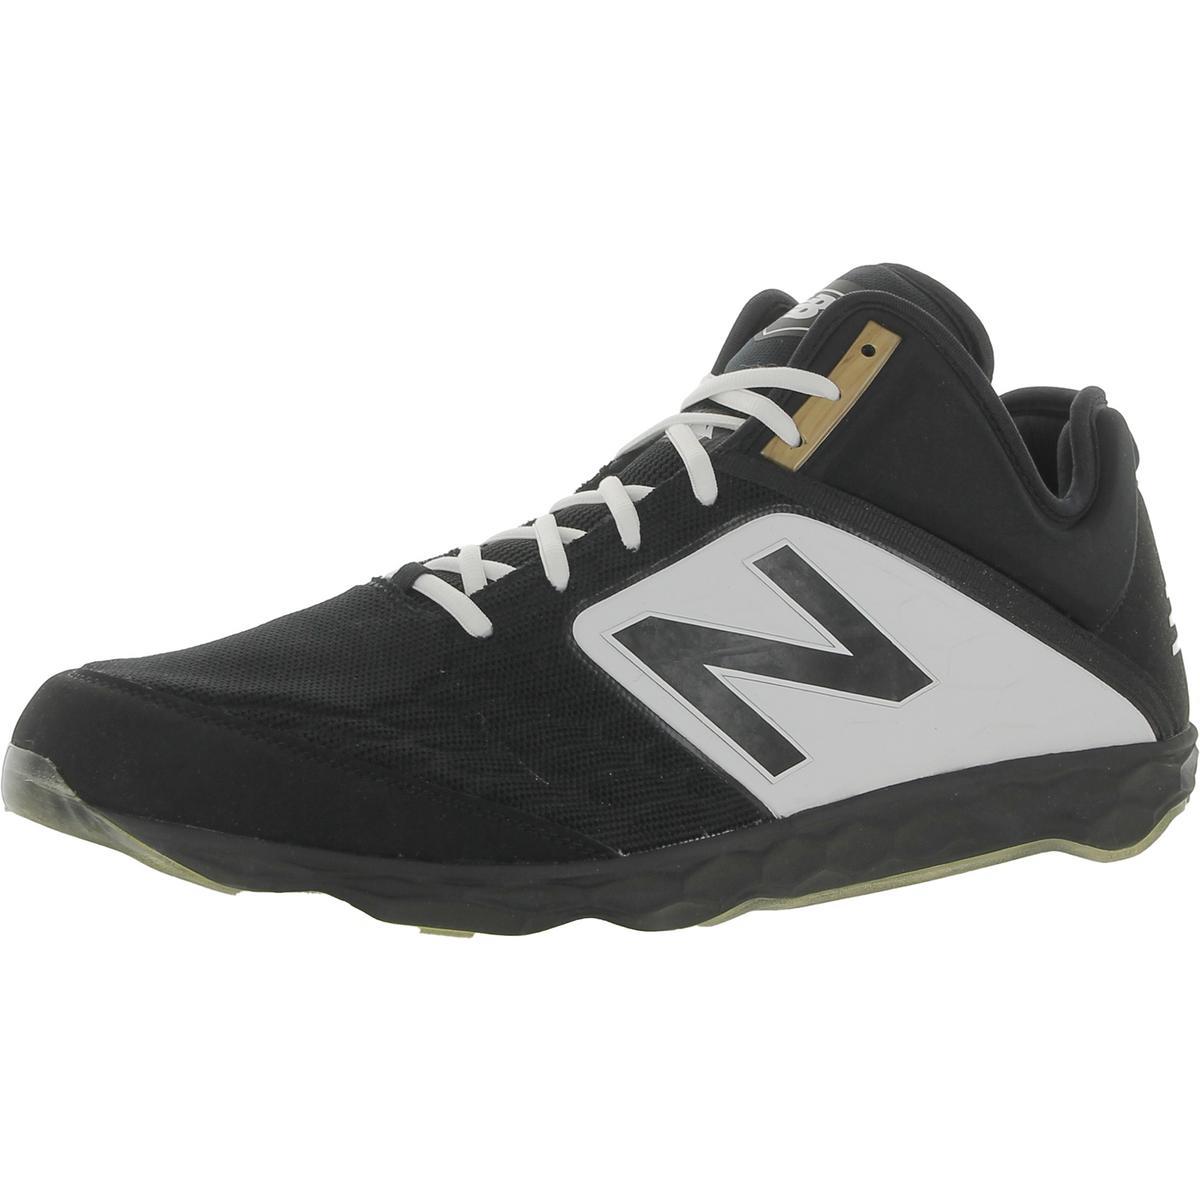 New Balance Mens Baseball Sports Trainers Cleats Sneakers Bhfo 5354 Black/White